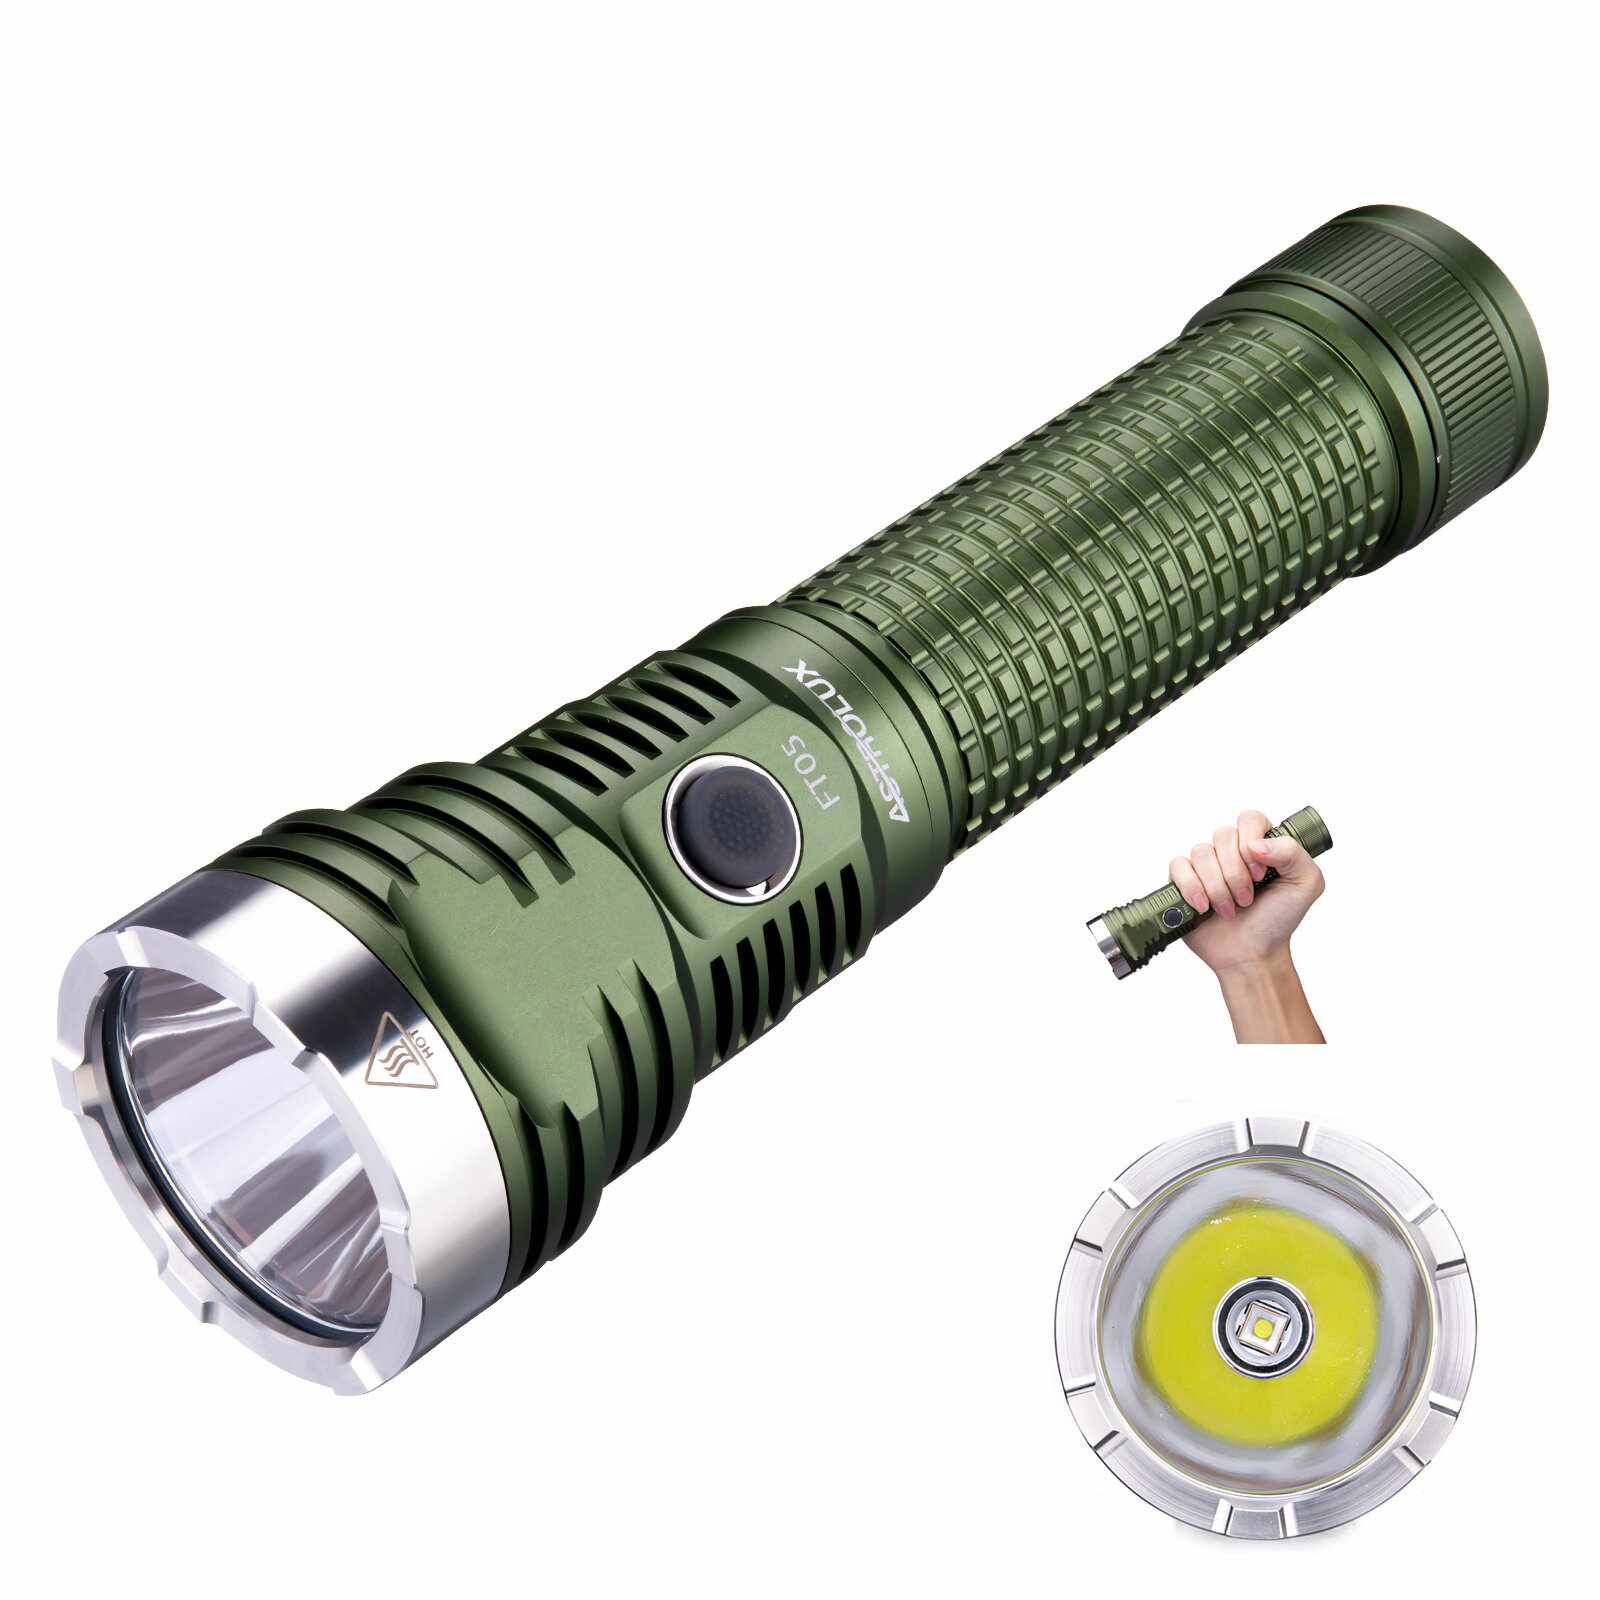 Astrolux FT05 3050LM 711M Long Throw LED Flashlight Banggood Coupon Promo Code